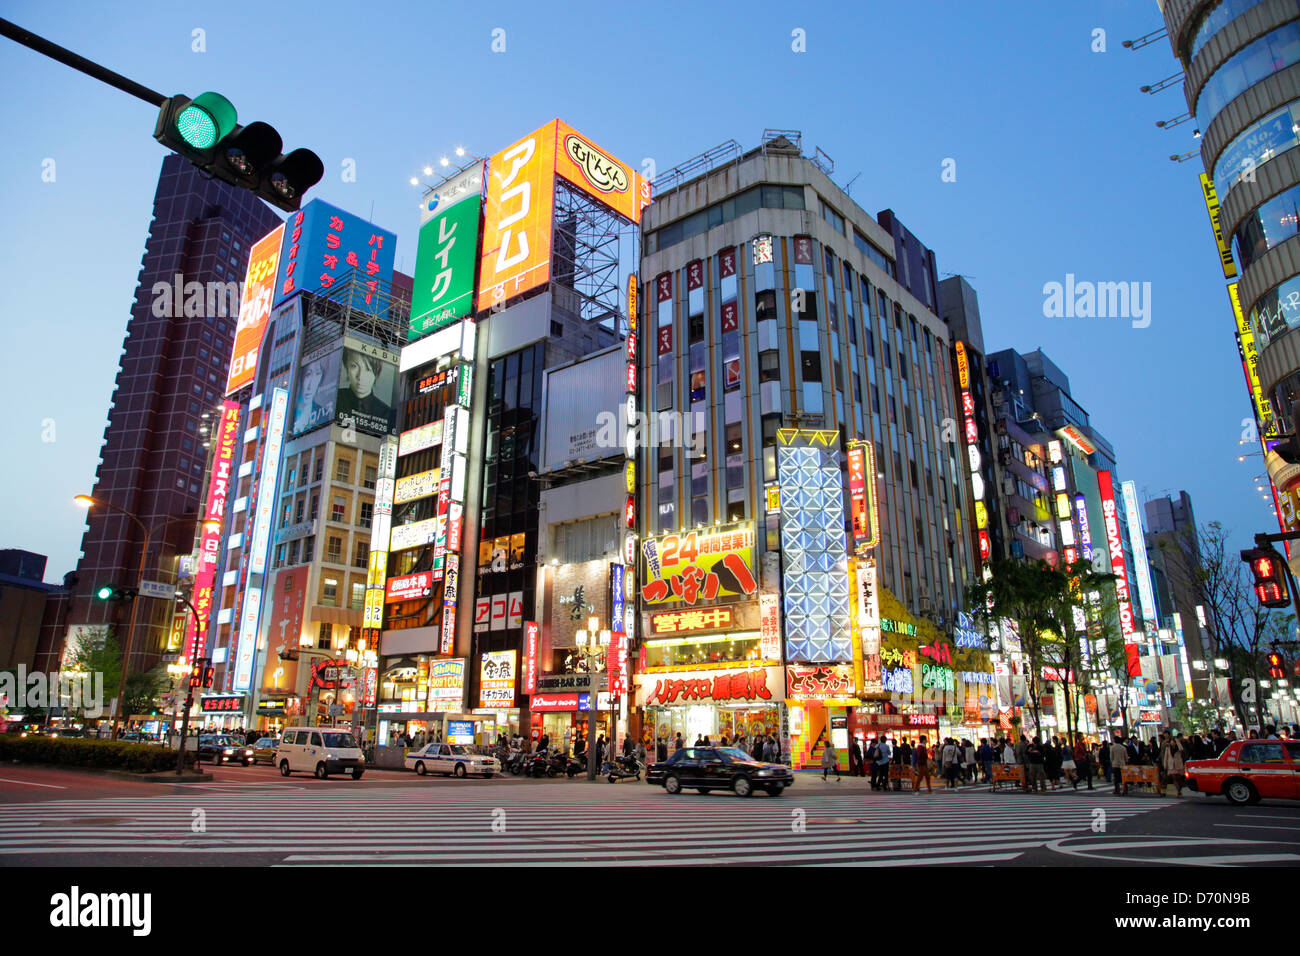 Kabukicho an entertainment district in Shinjuku at night Tokyo Japan Stock Photo